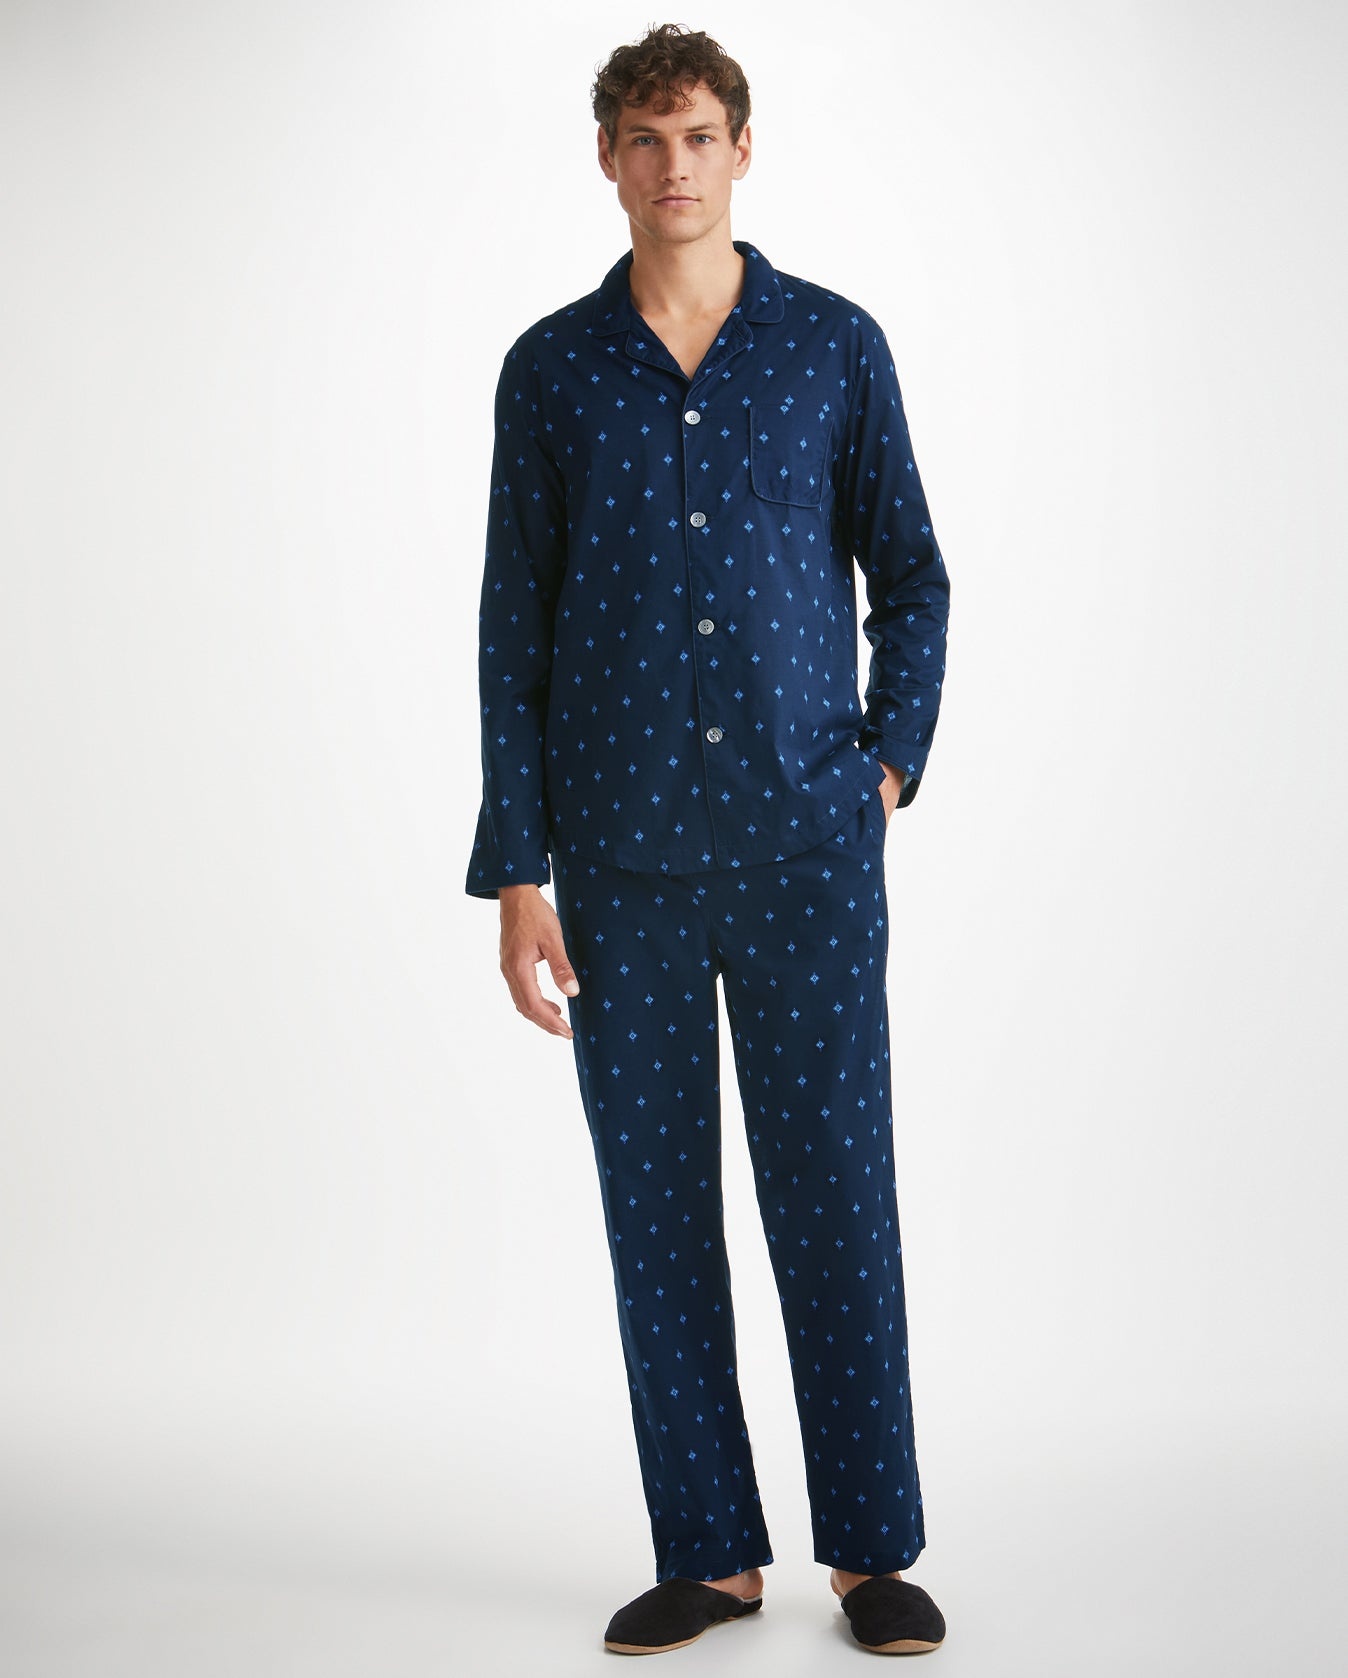 Nelson Paisley Cotton Modern Fit Pyjama Set - Navy - 2